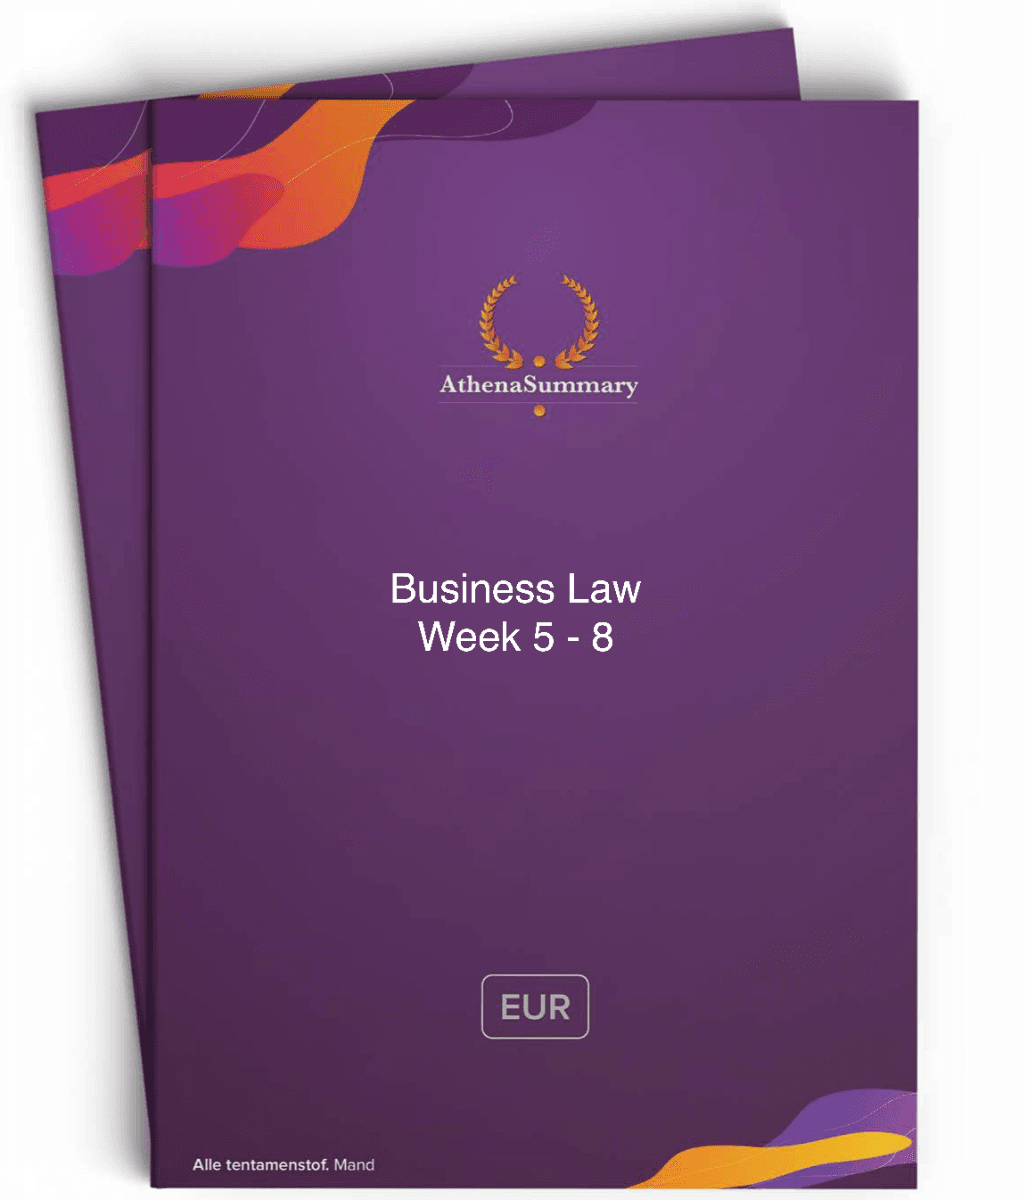 Literature Summary: Business Law Weeks 5-8